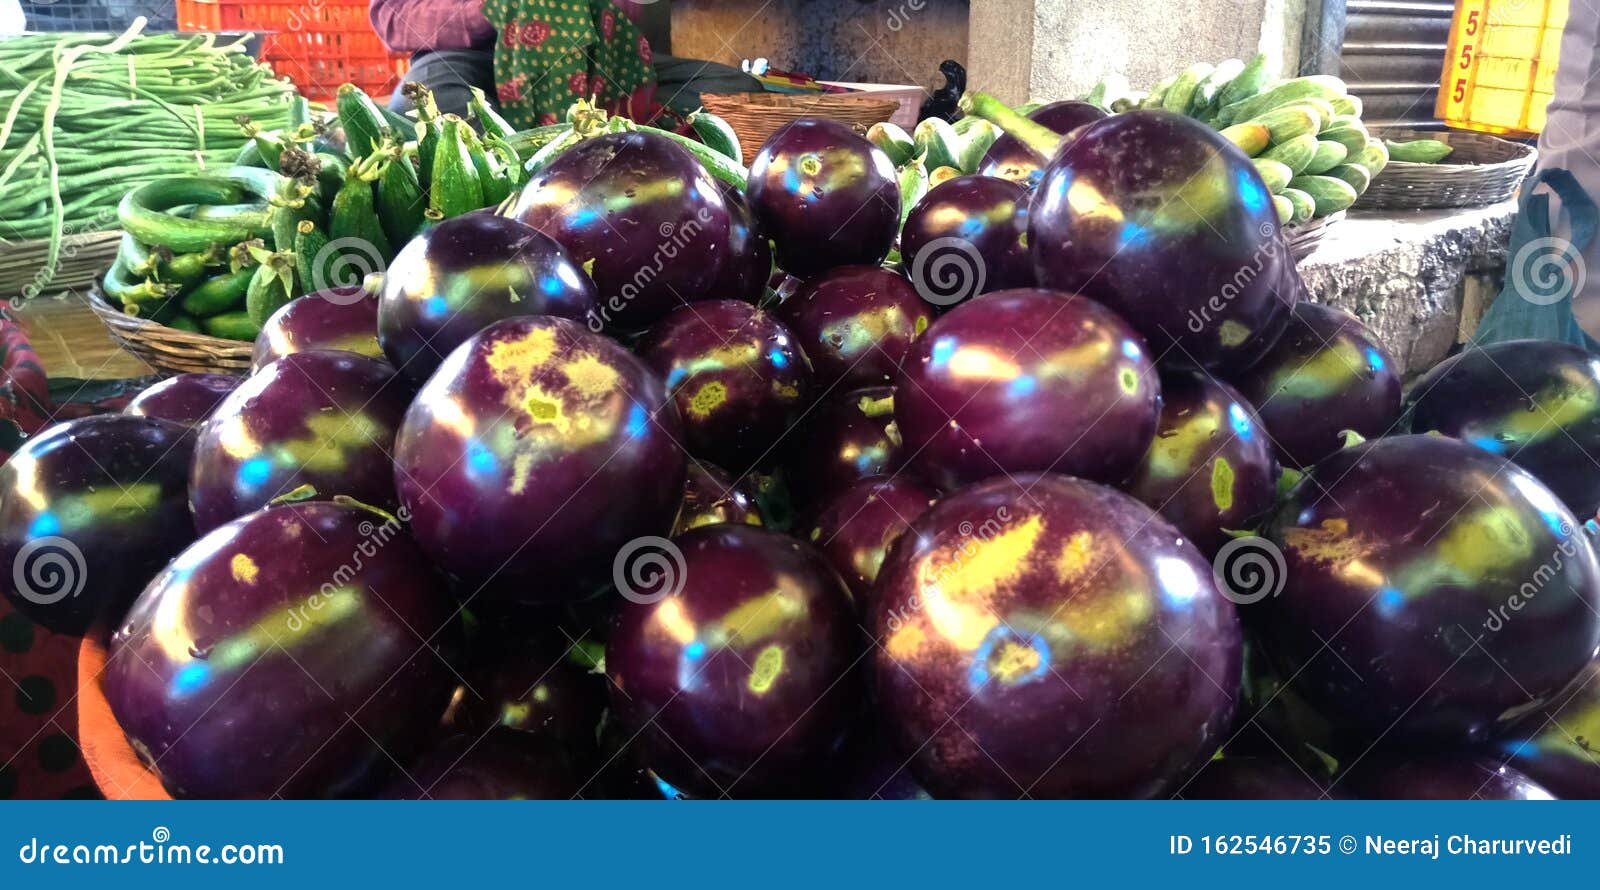 dark colored vegetables begun  on fruit store